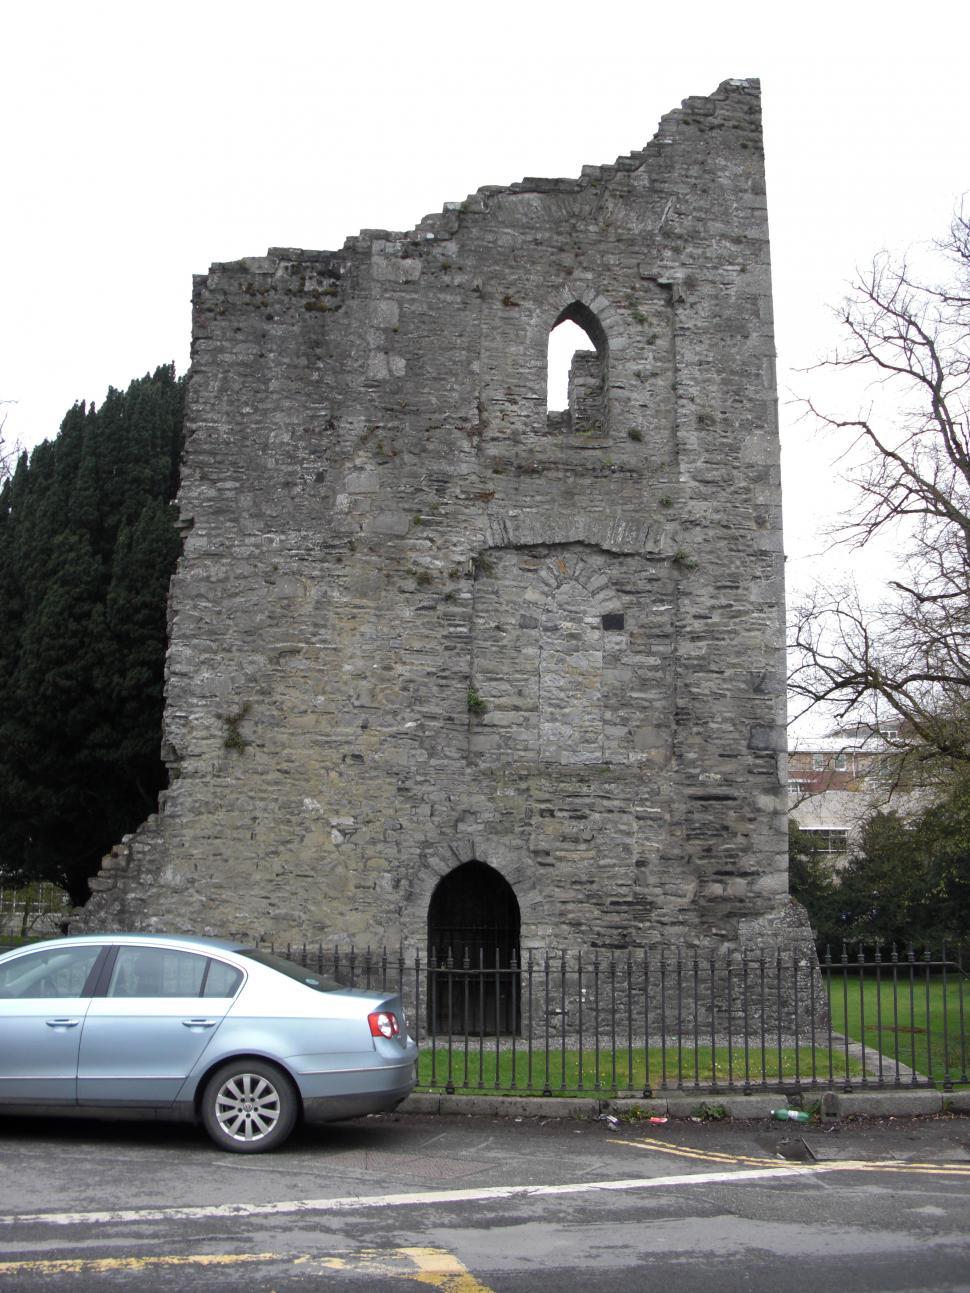 Free Image of Ireland - Old Castle 